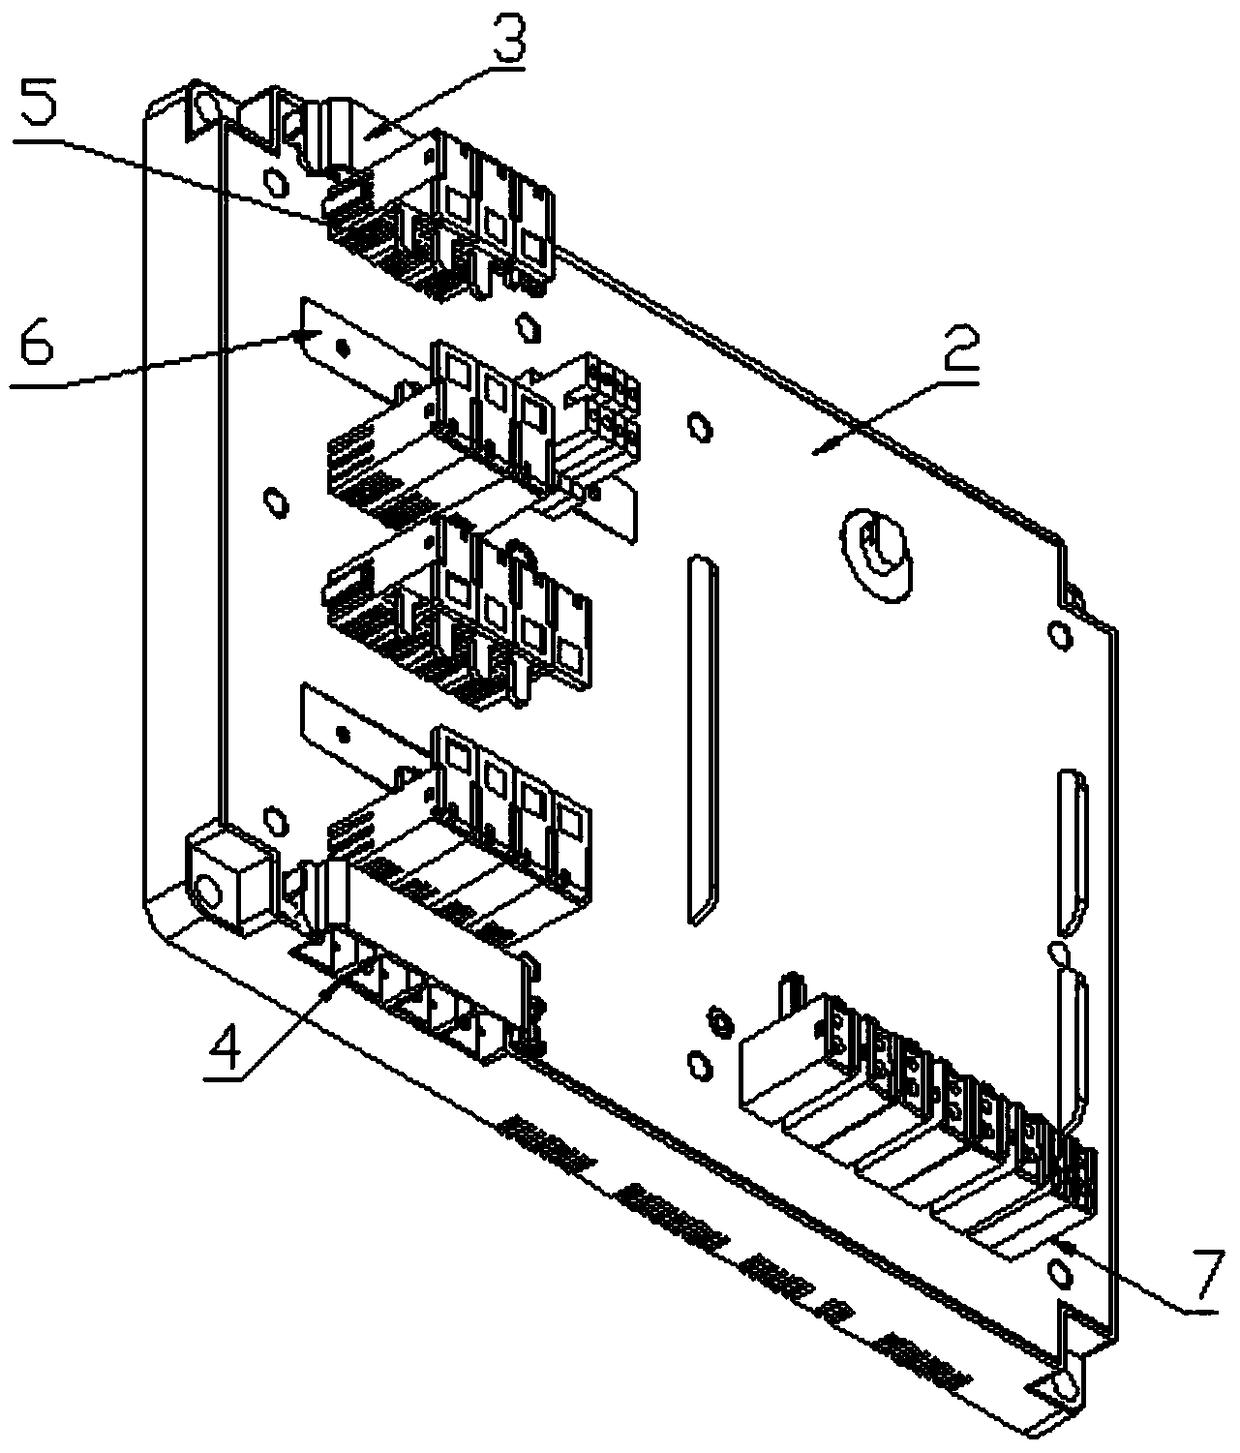 Three-phase novel electric meter box